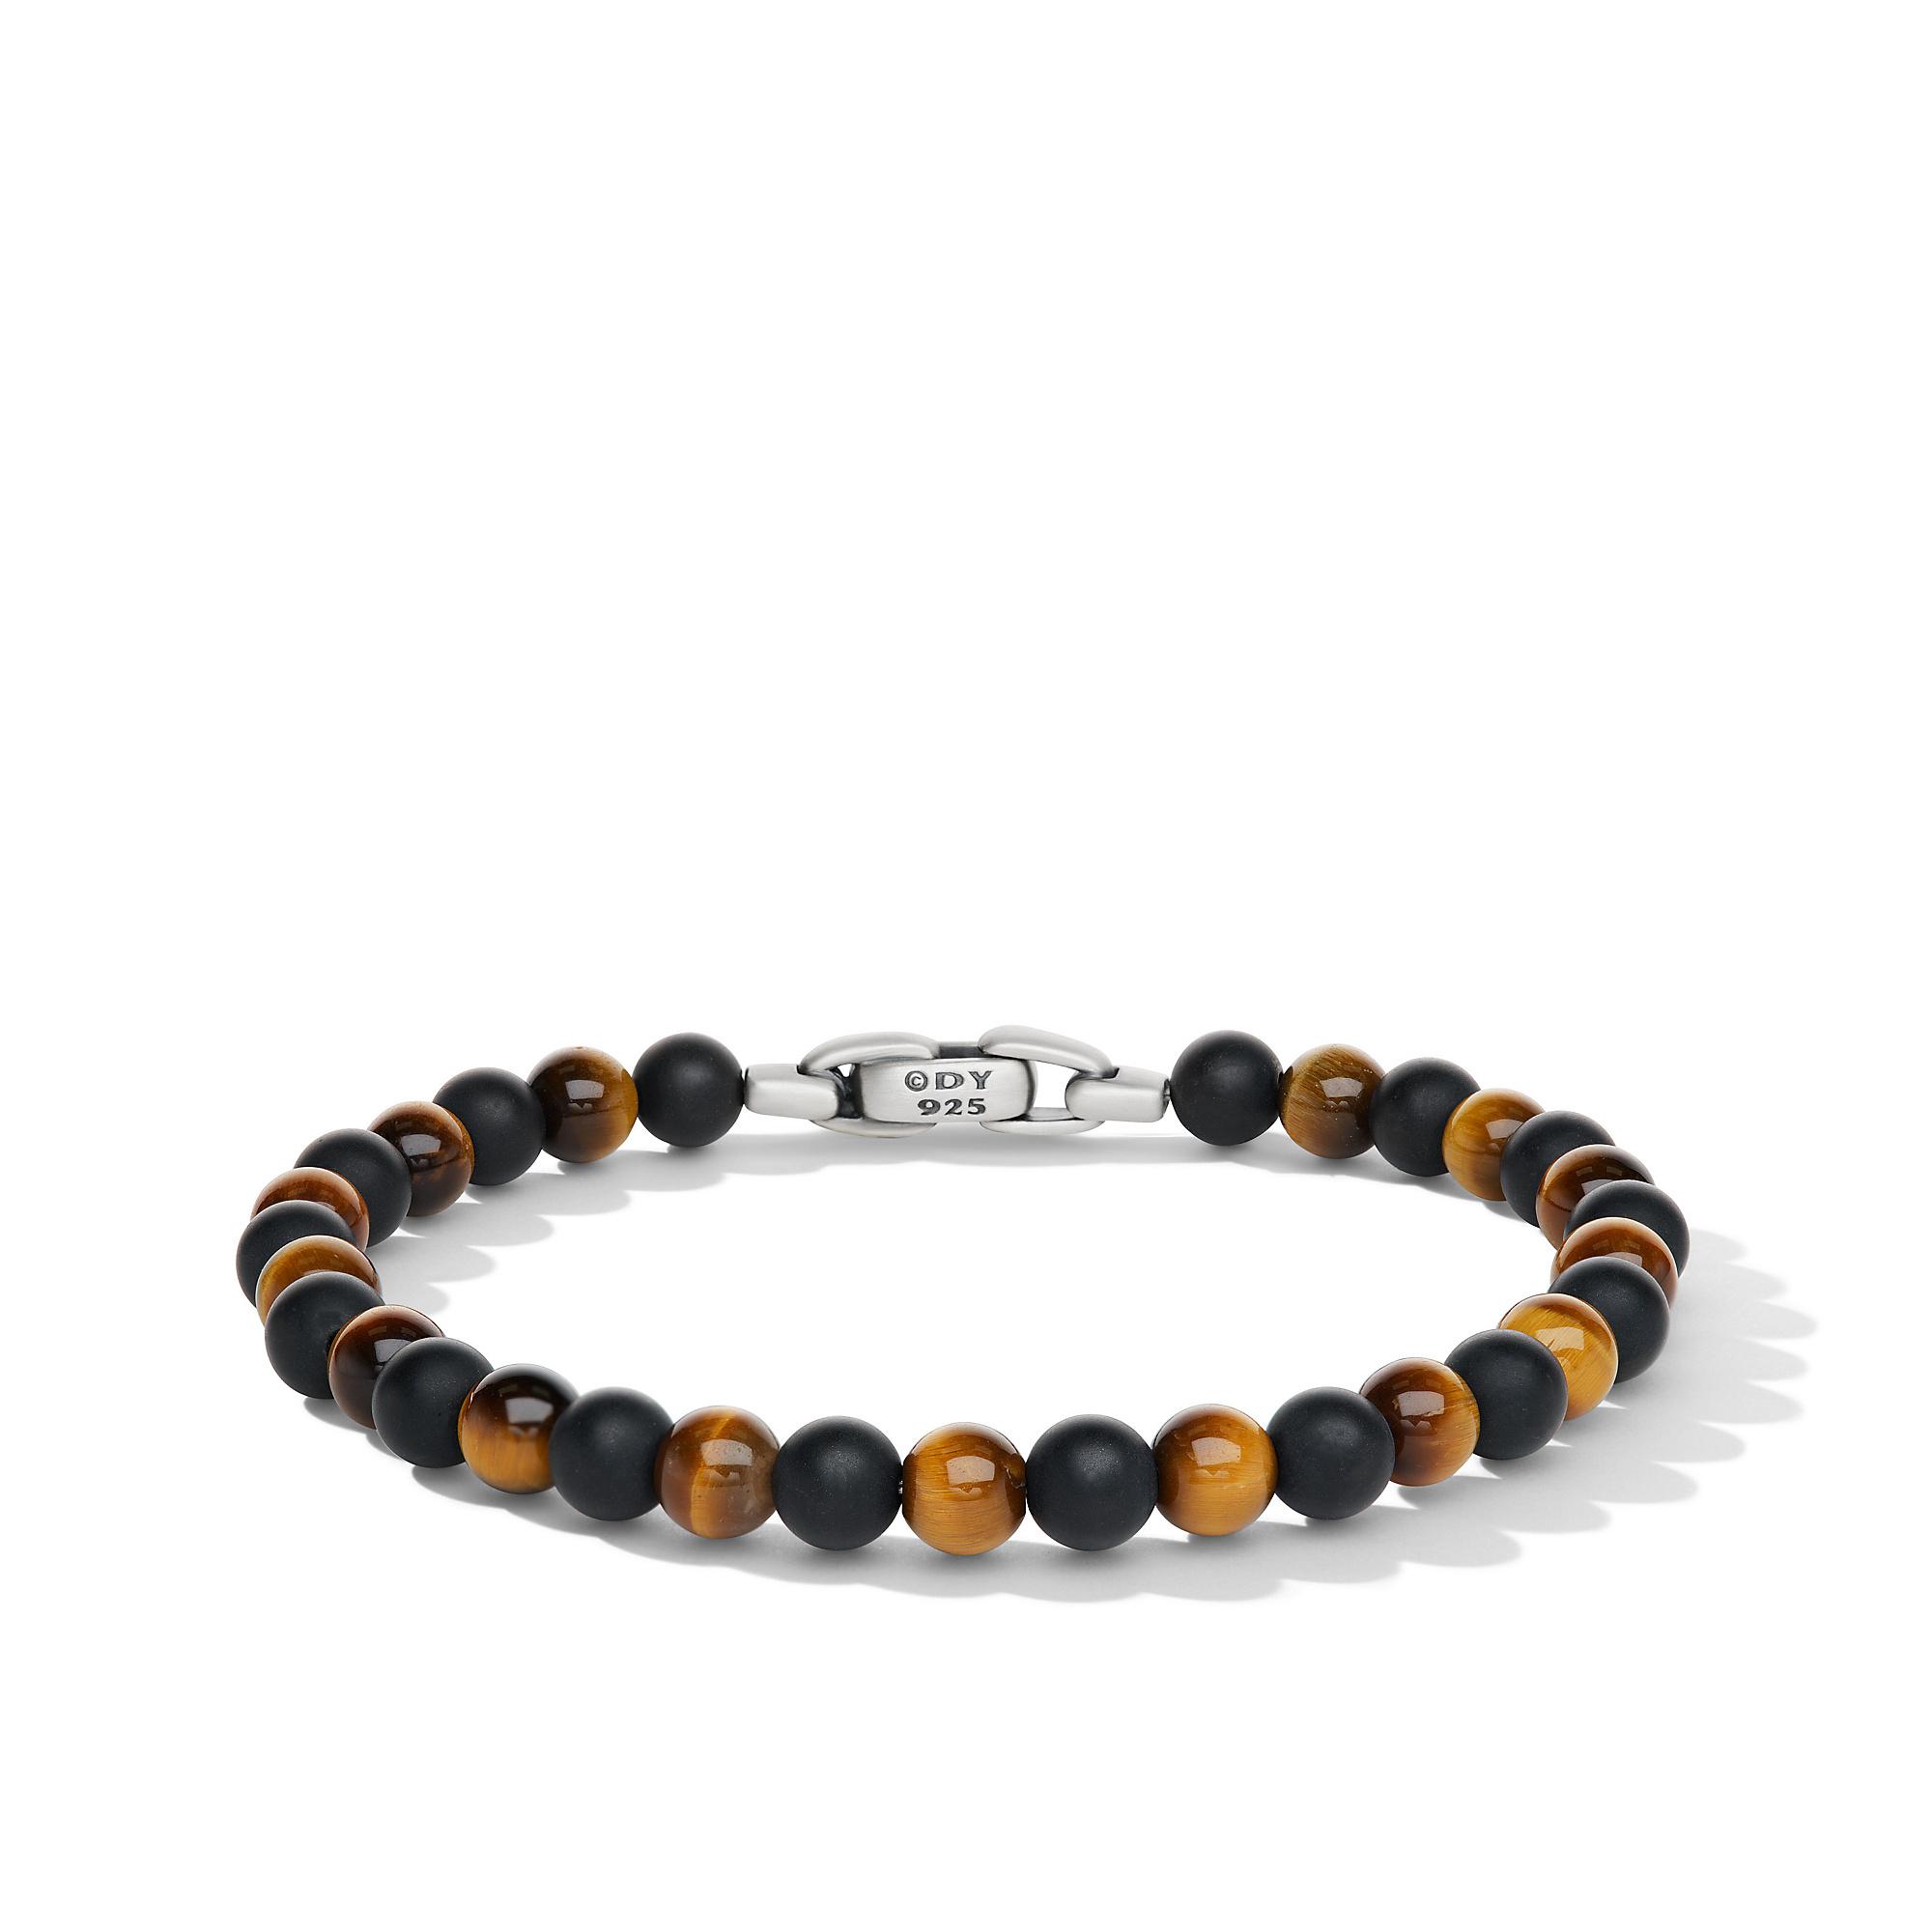 David Yurman Men's Spiritual Beads Bracelet with Black Onyx and Tiger's Eye